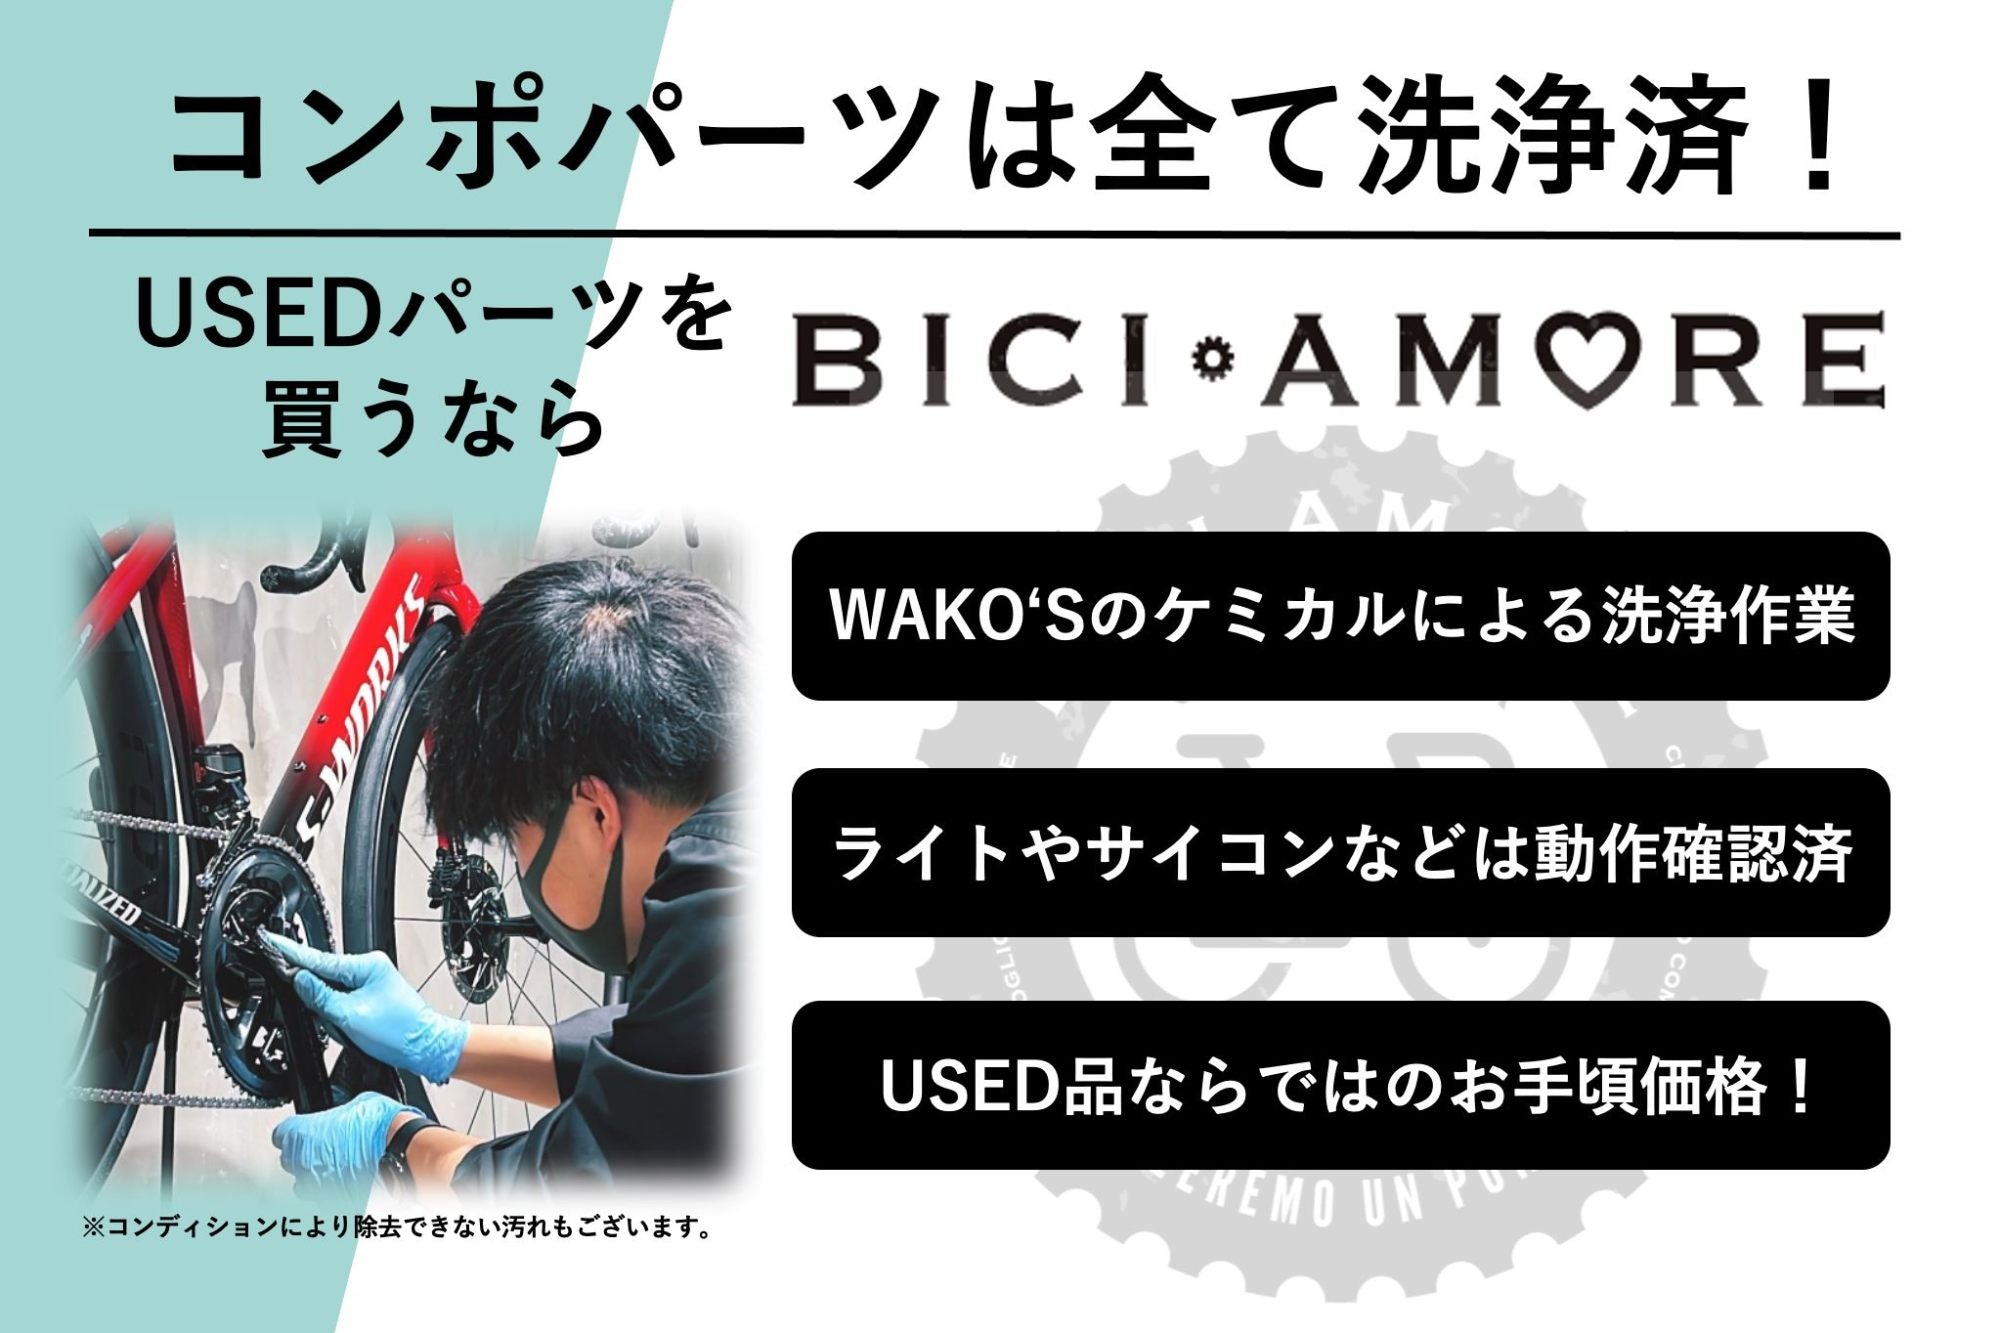 HC417 シマノ SHIMANO アルテグラ ULTEGRA PD-6800 ビンディングペダル 